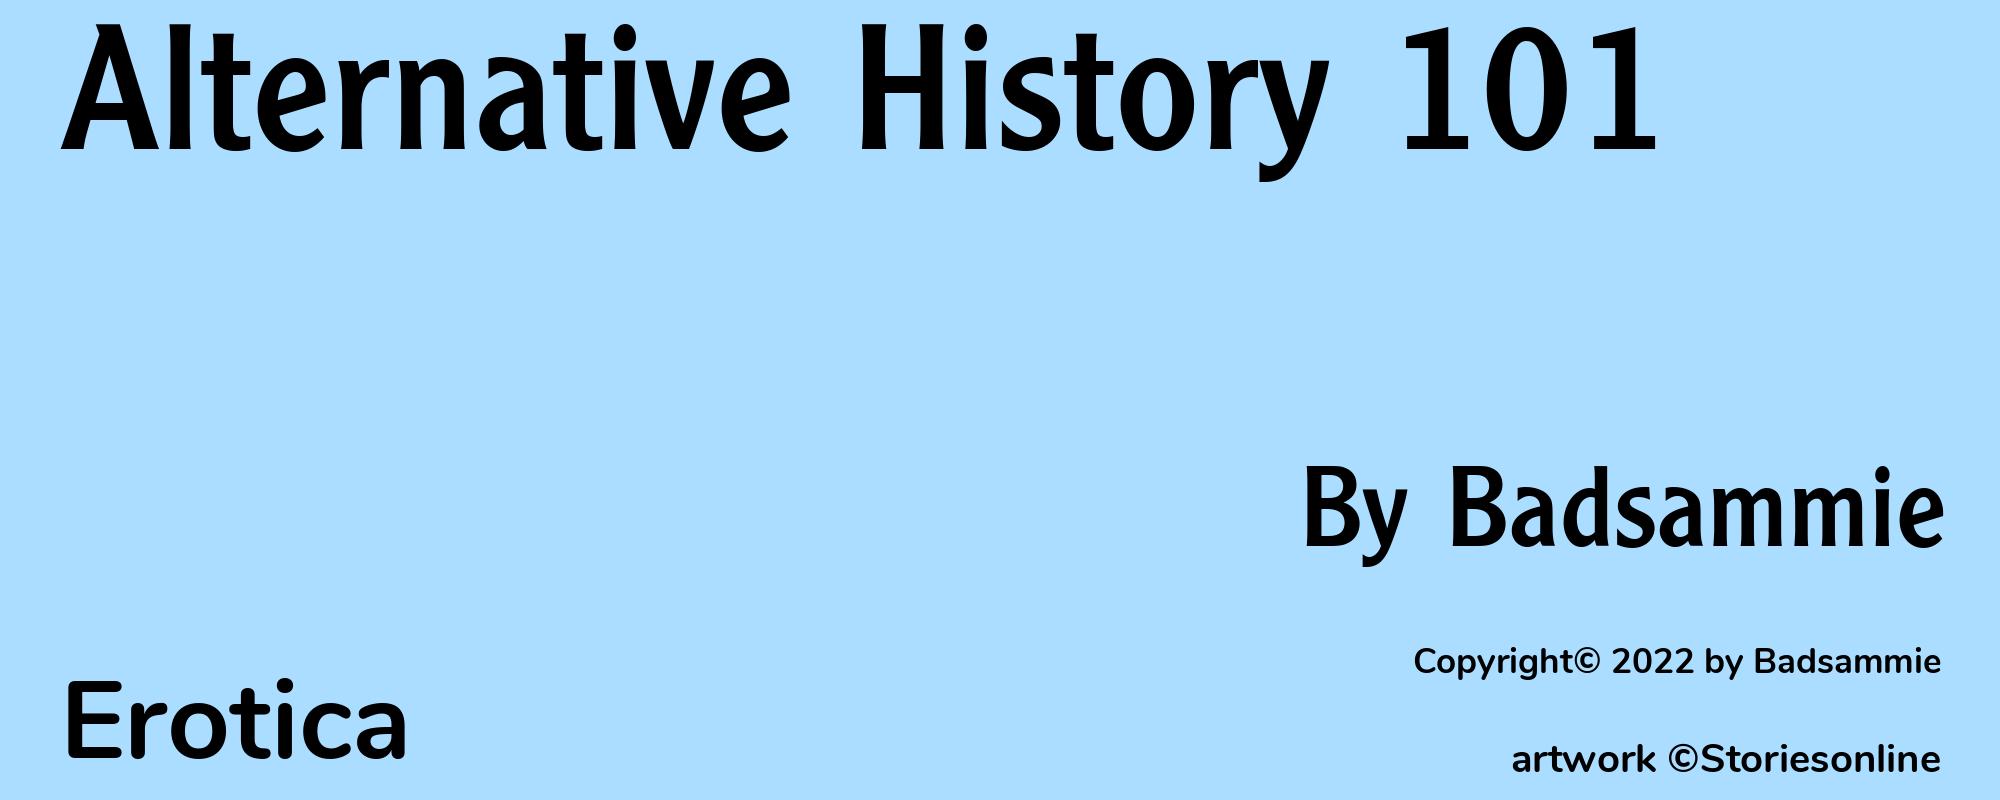 Alternative History 101 - Cover